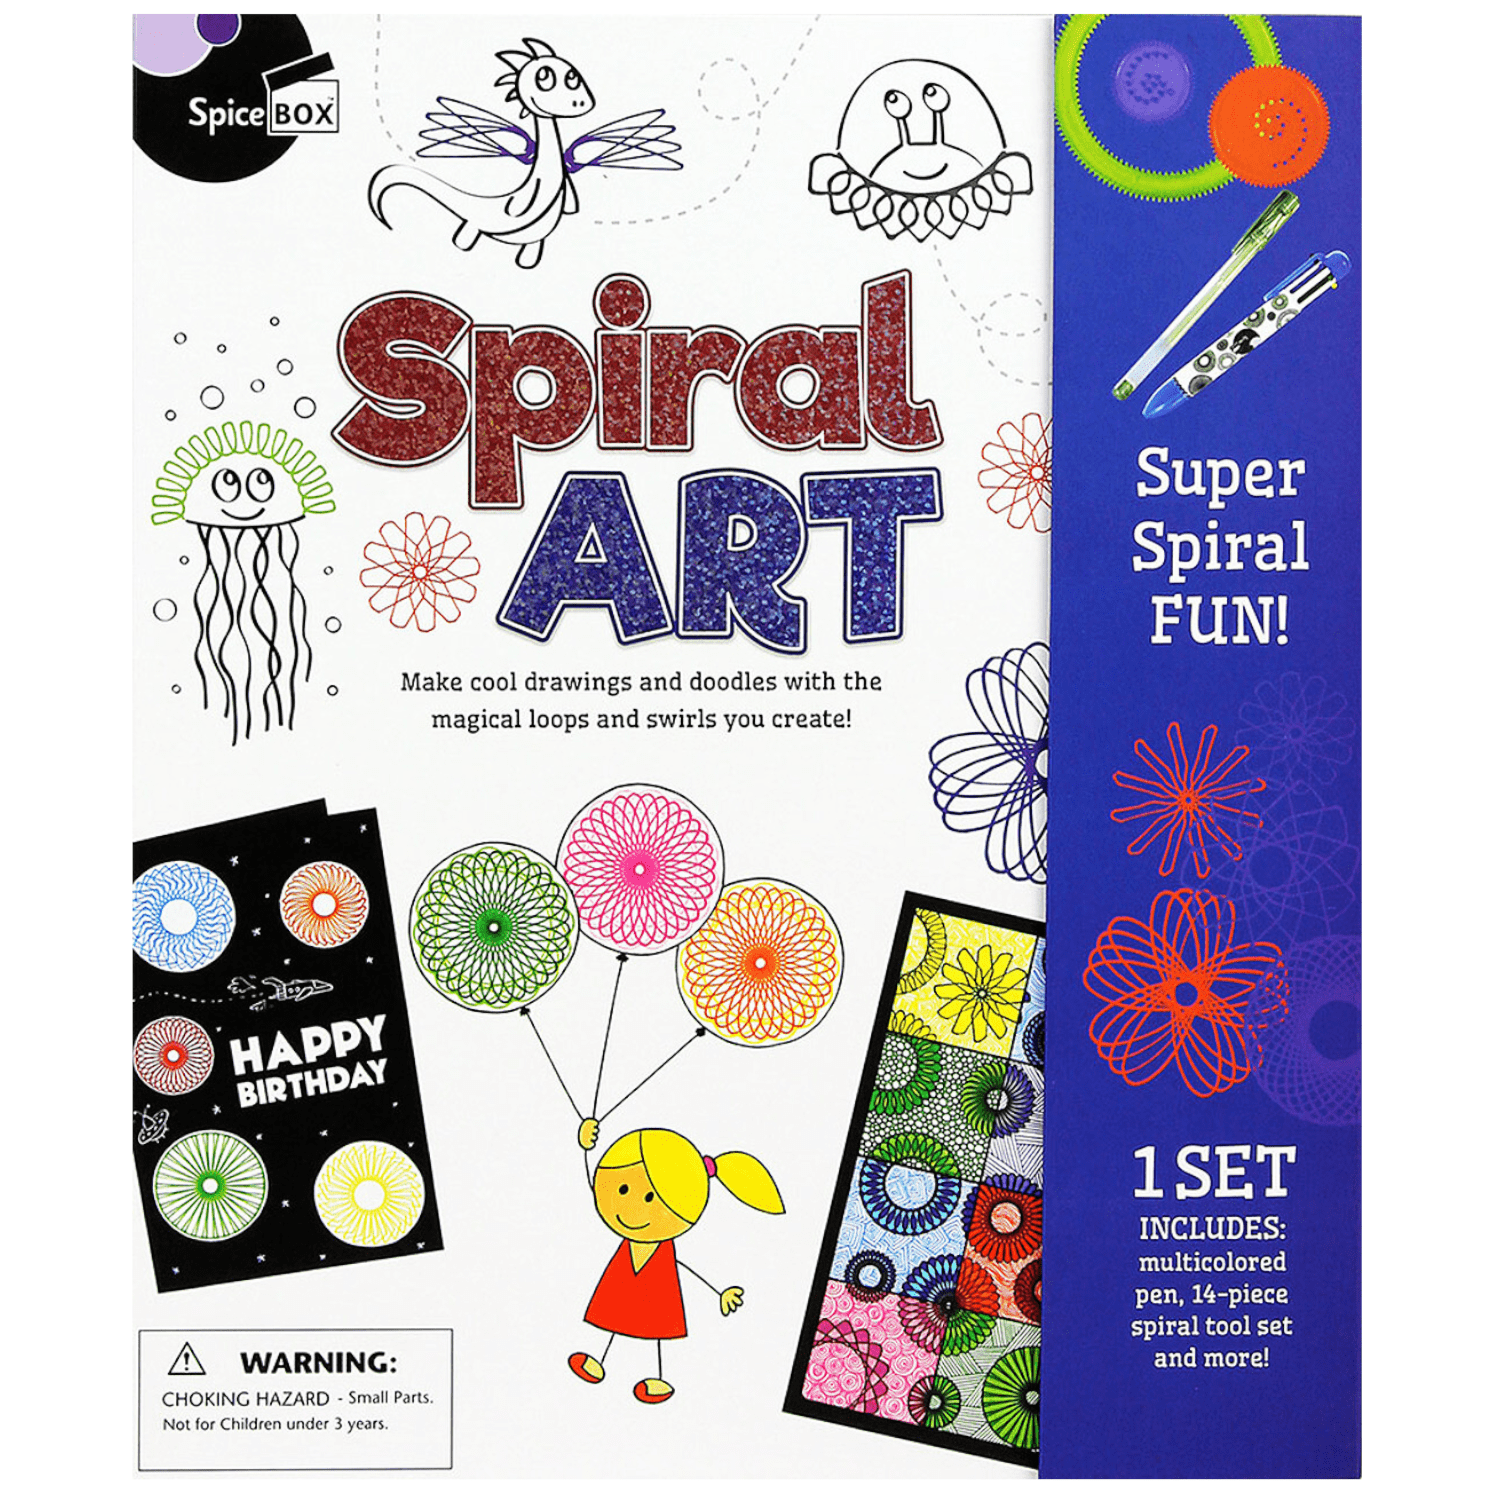 Kits for Kids: Spiral Art 